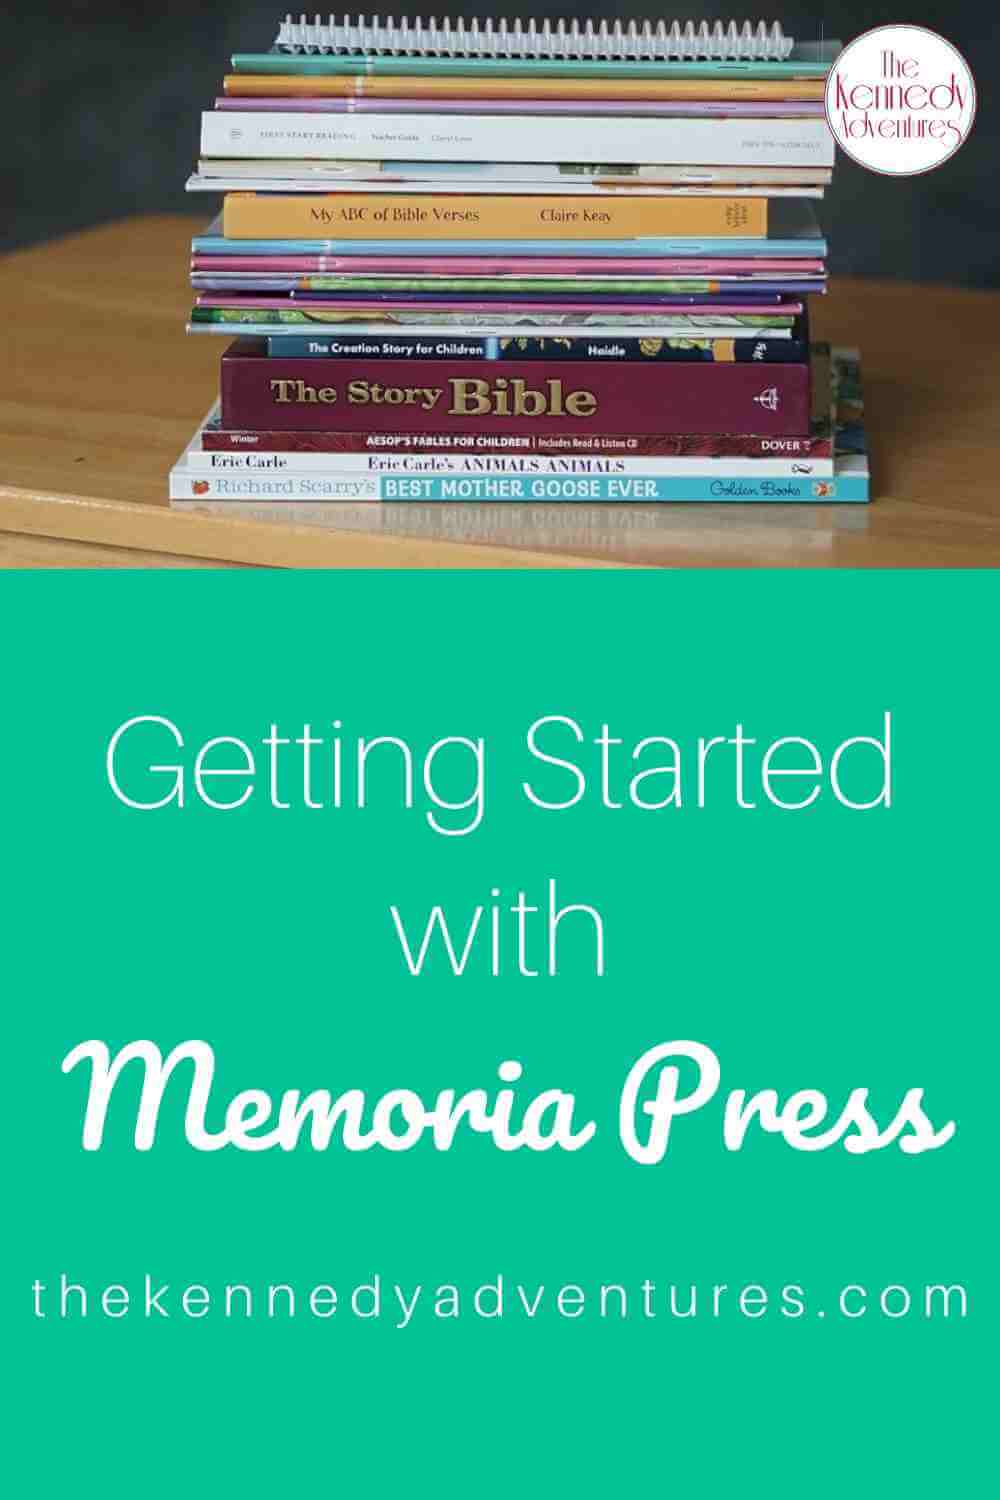 Memoria Press Homeschool tips